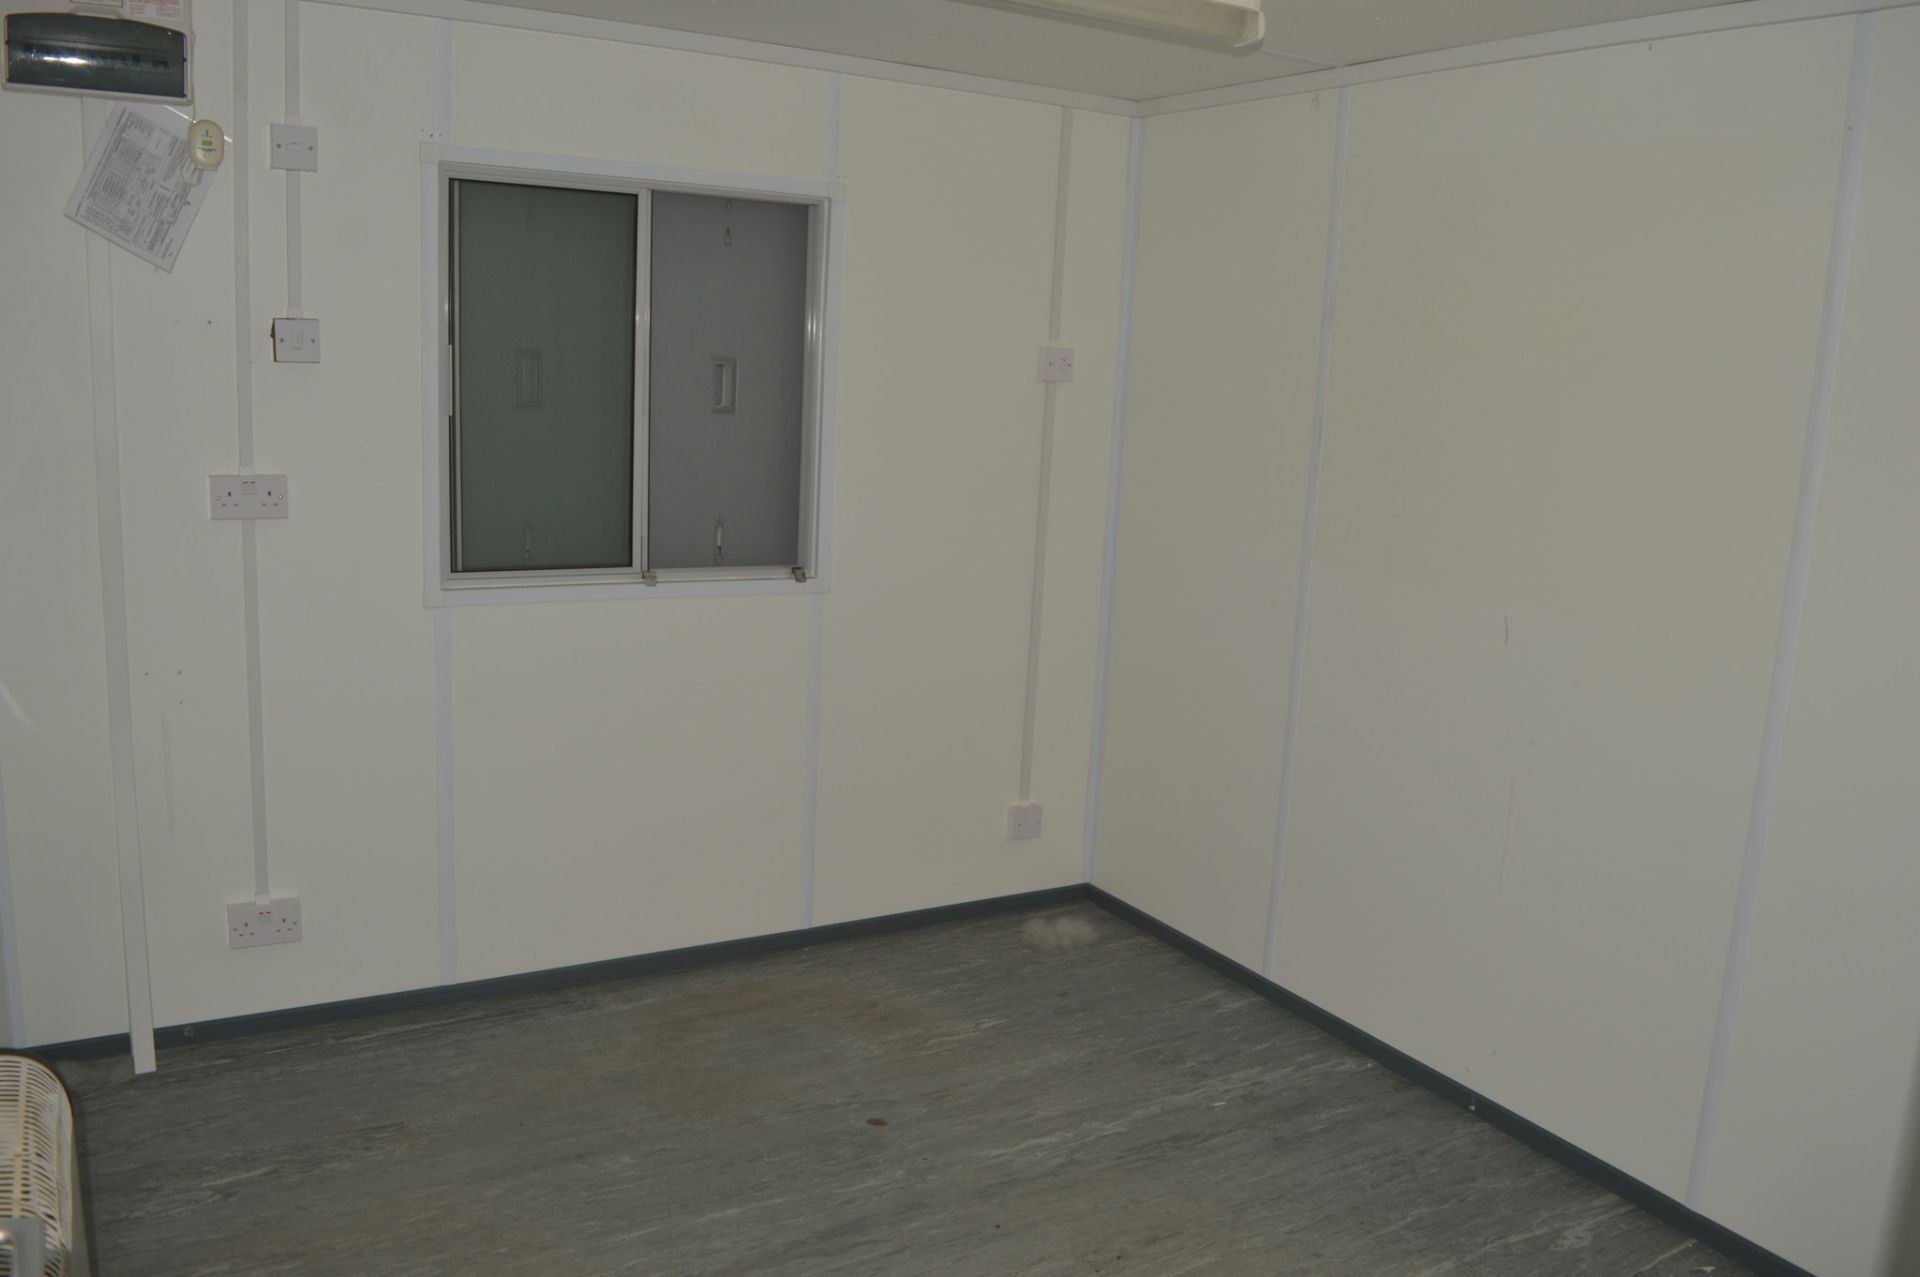 32 ft x 10 ft jack leg steel anti vandal site unit office c/w keys in office  *One door missing* - Image 6 of 9